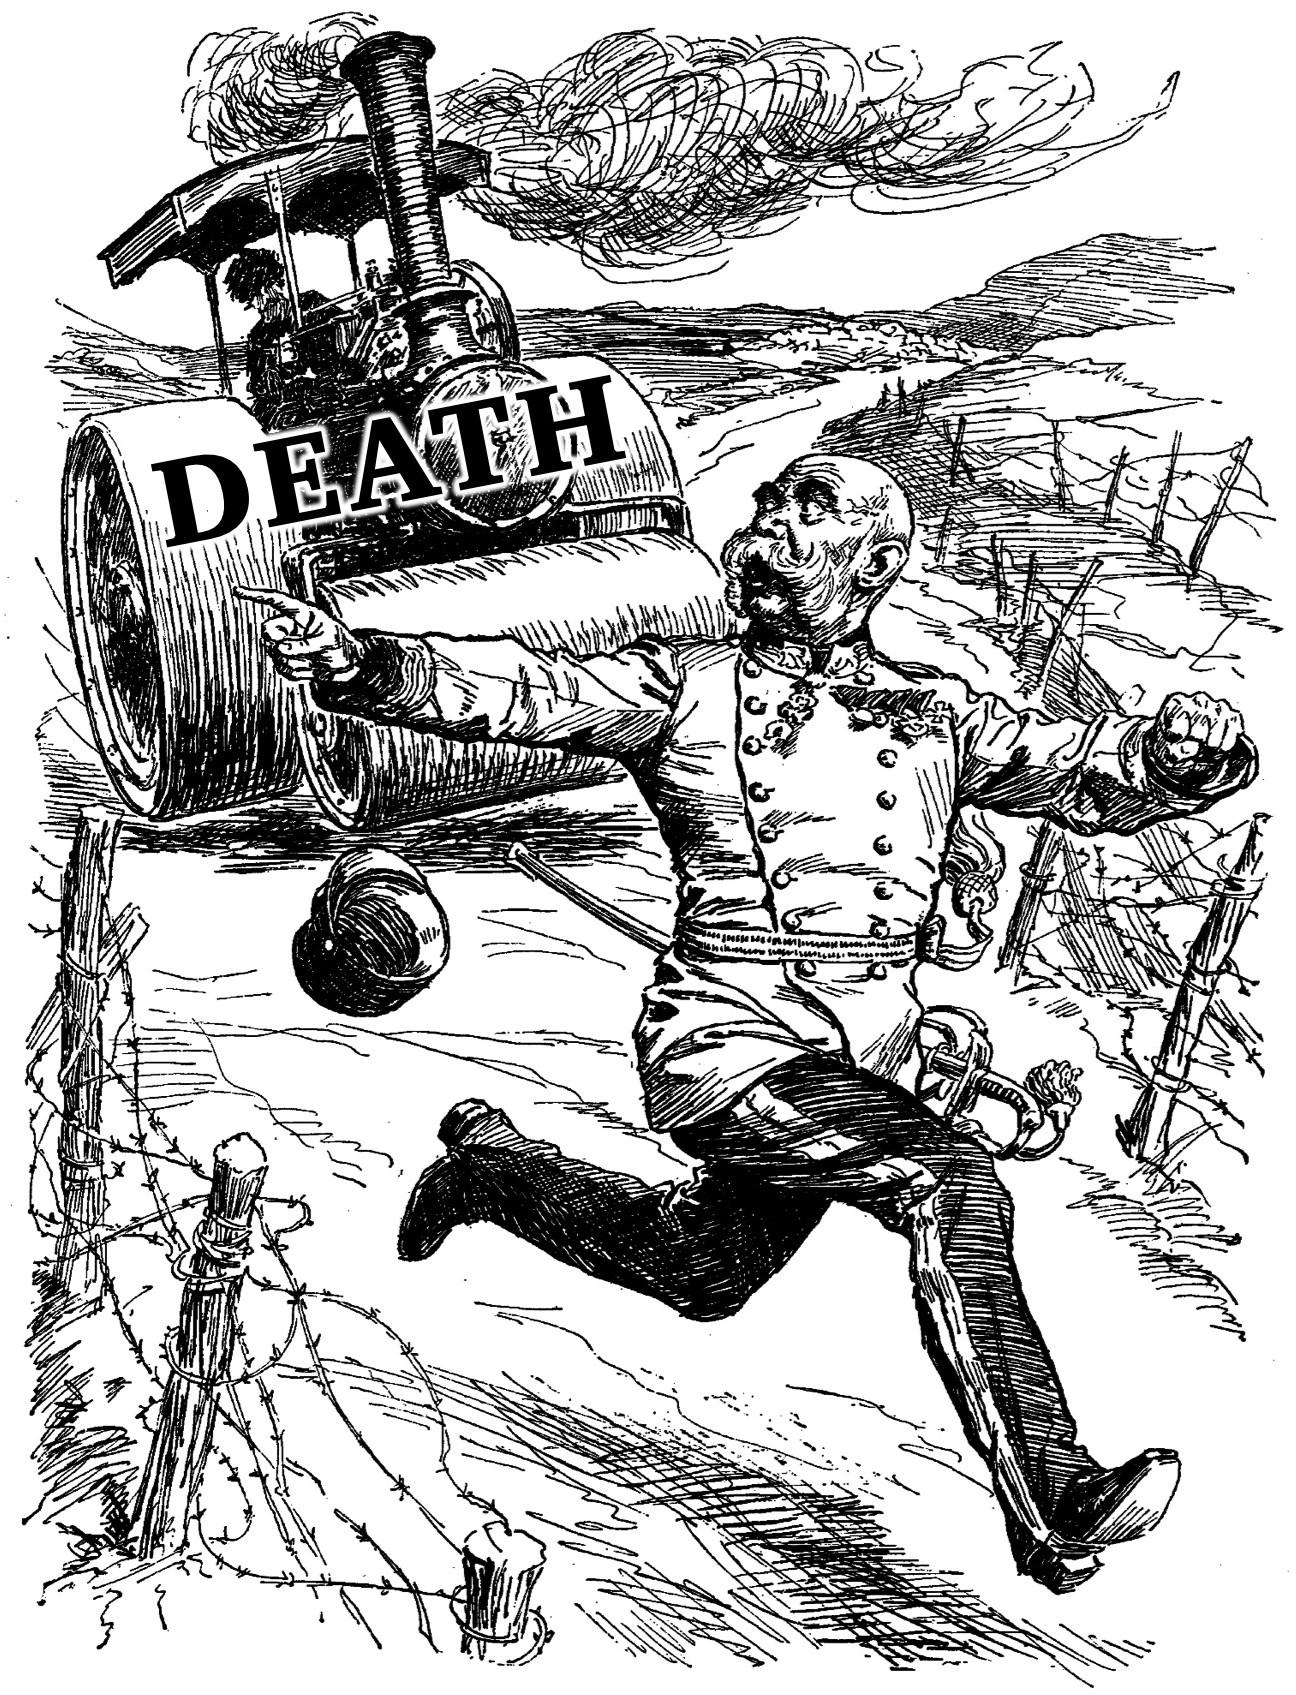 death as a steam roller chasing a man